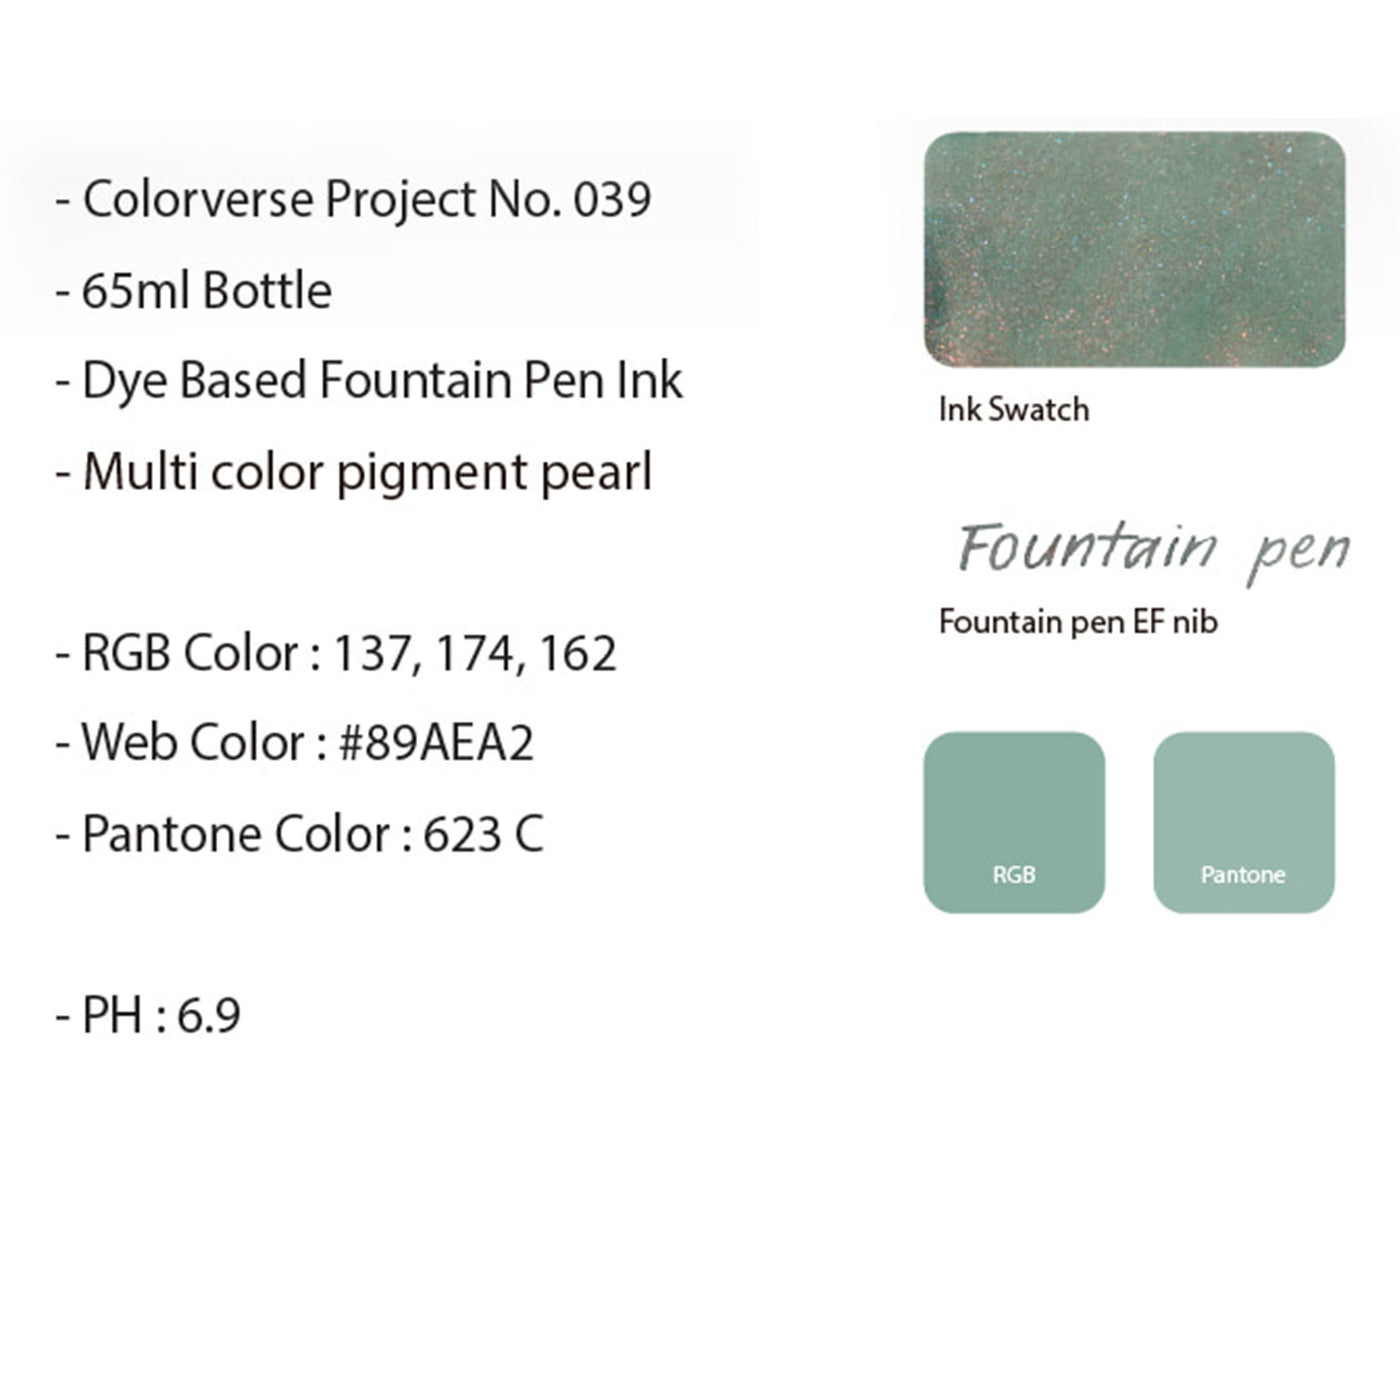 Colorverse Cat's Eye Nebula Ink Bottle, Glistening Light Green - 65ml